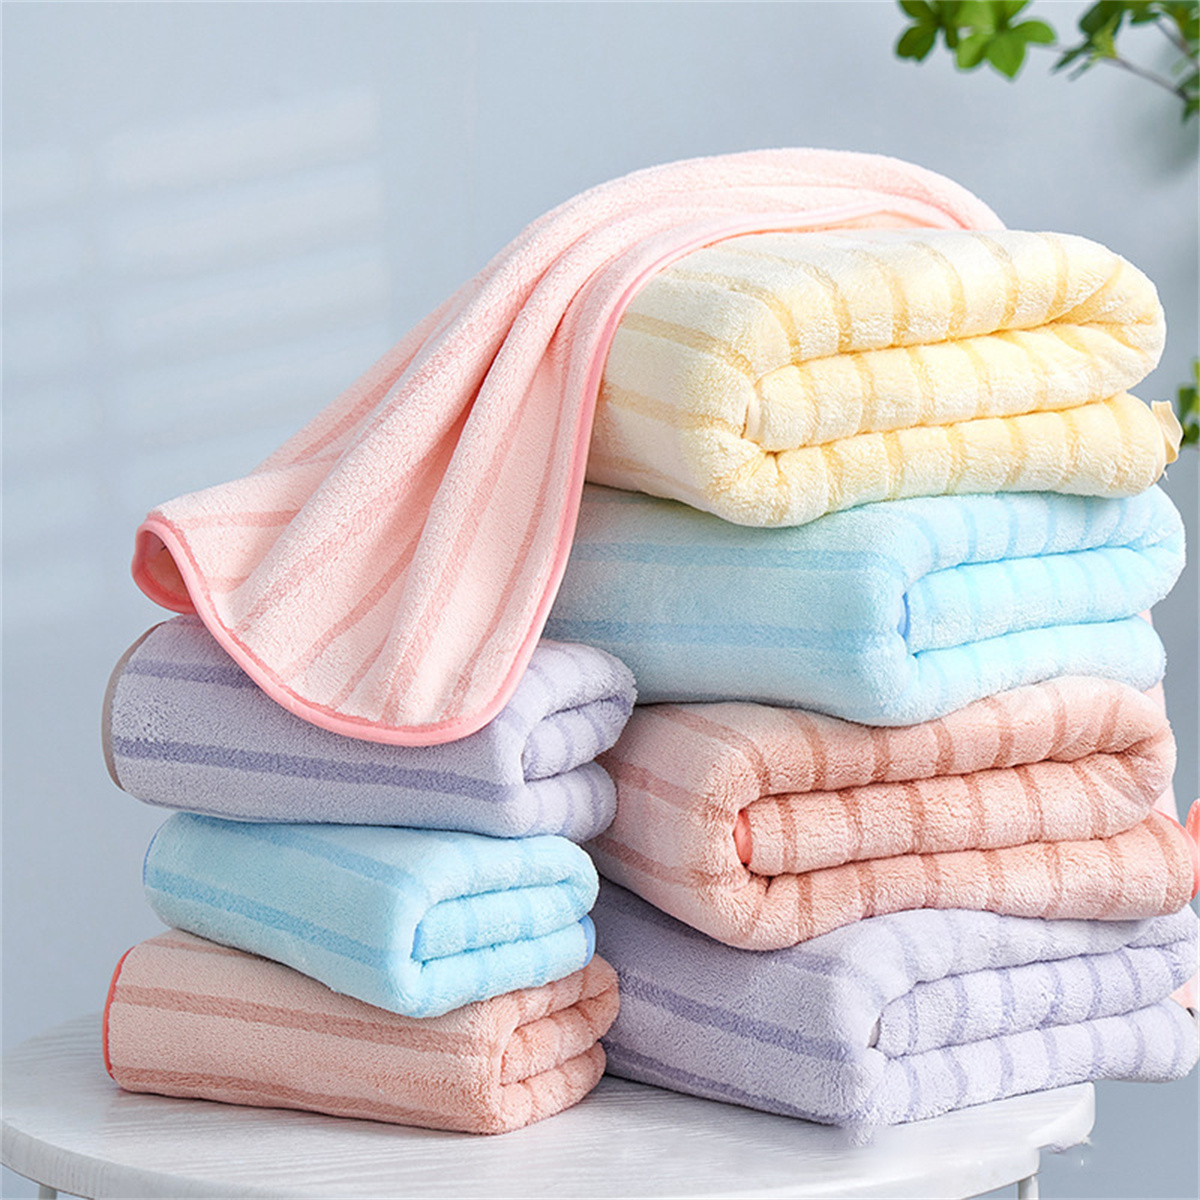 Bath Towels - More Soft, More Absorbent, More Value